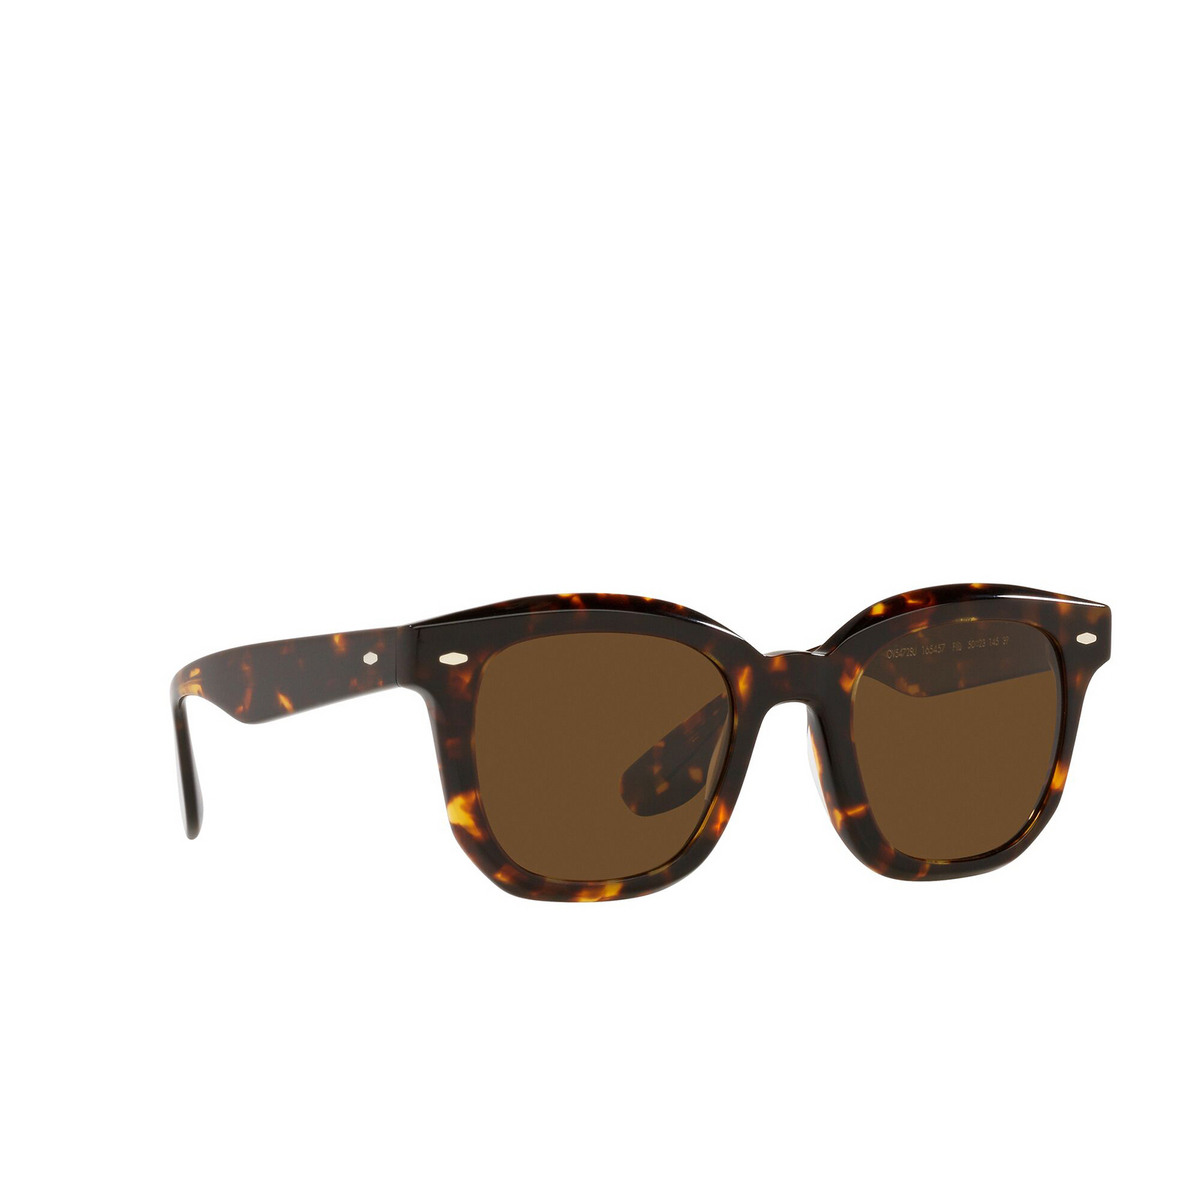 Oliver Peoples® Square Sunglasses: Filu' OV5472SU color Dm2 165457 - three-quarters view.